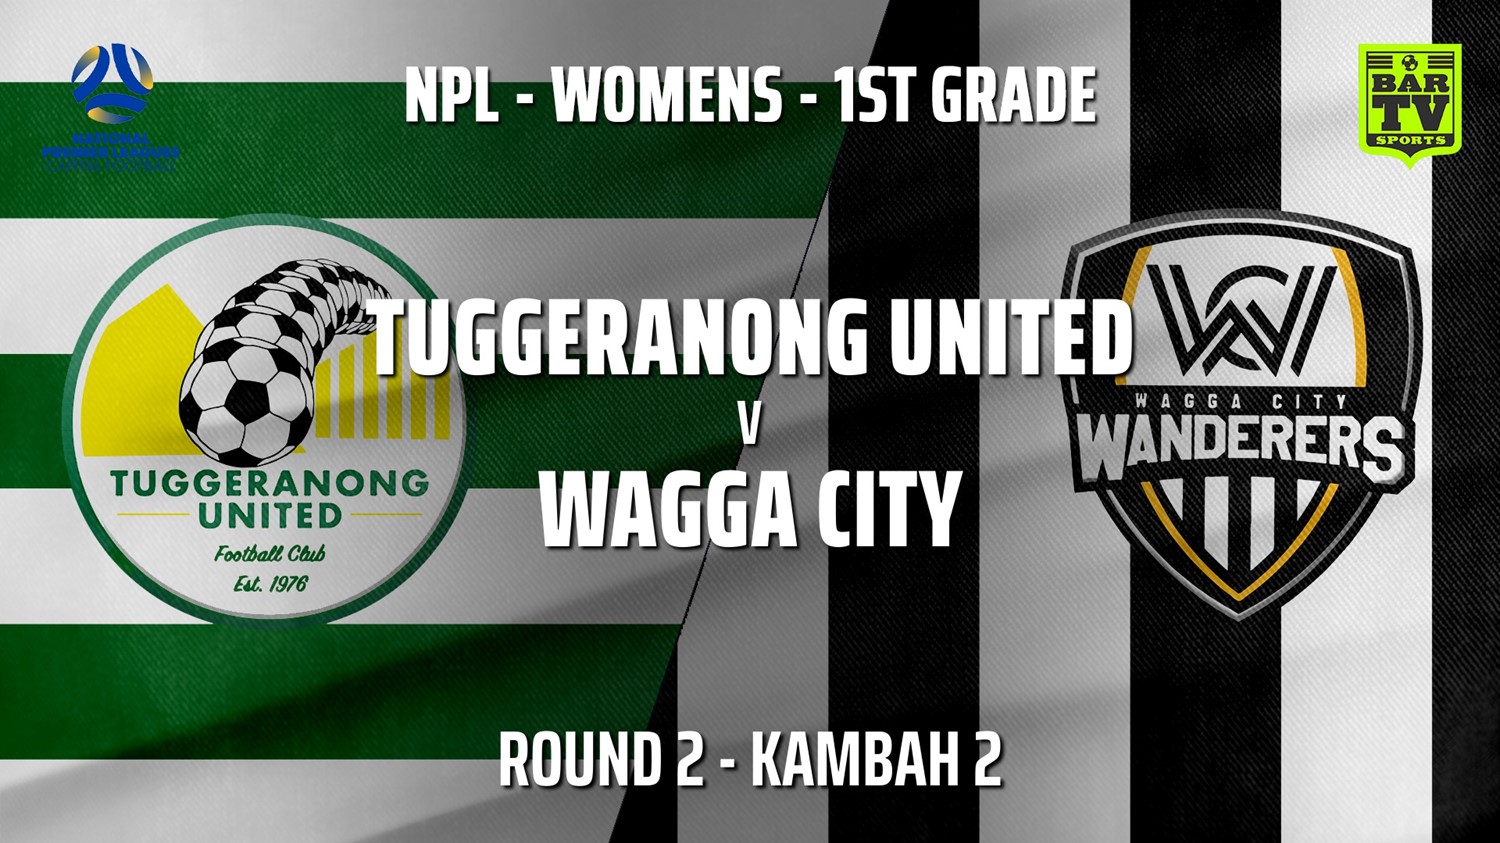 NPLW - Capital Round 2 - Tuggeranong United FC (women) v Wagga City Wanderers FC (women) Minigame Slate Image